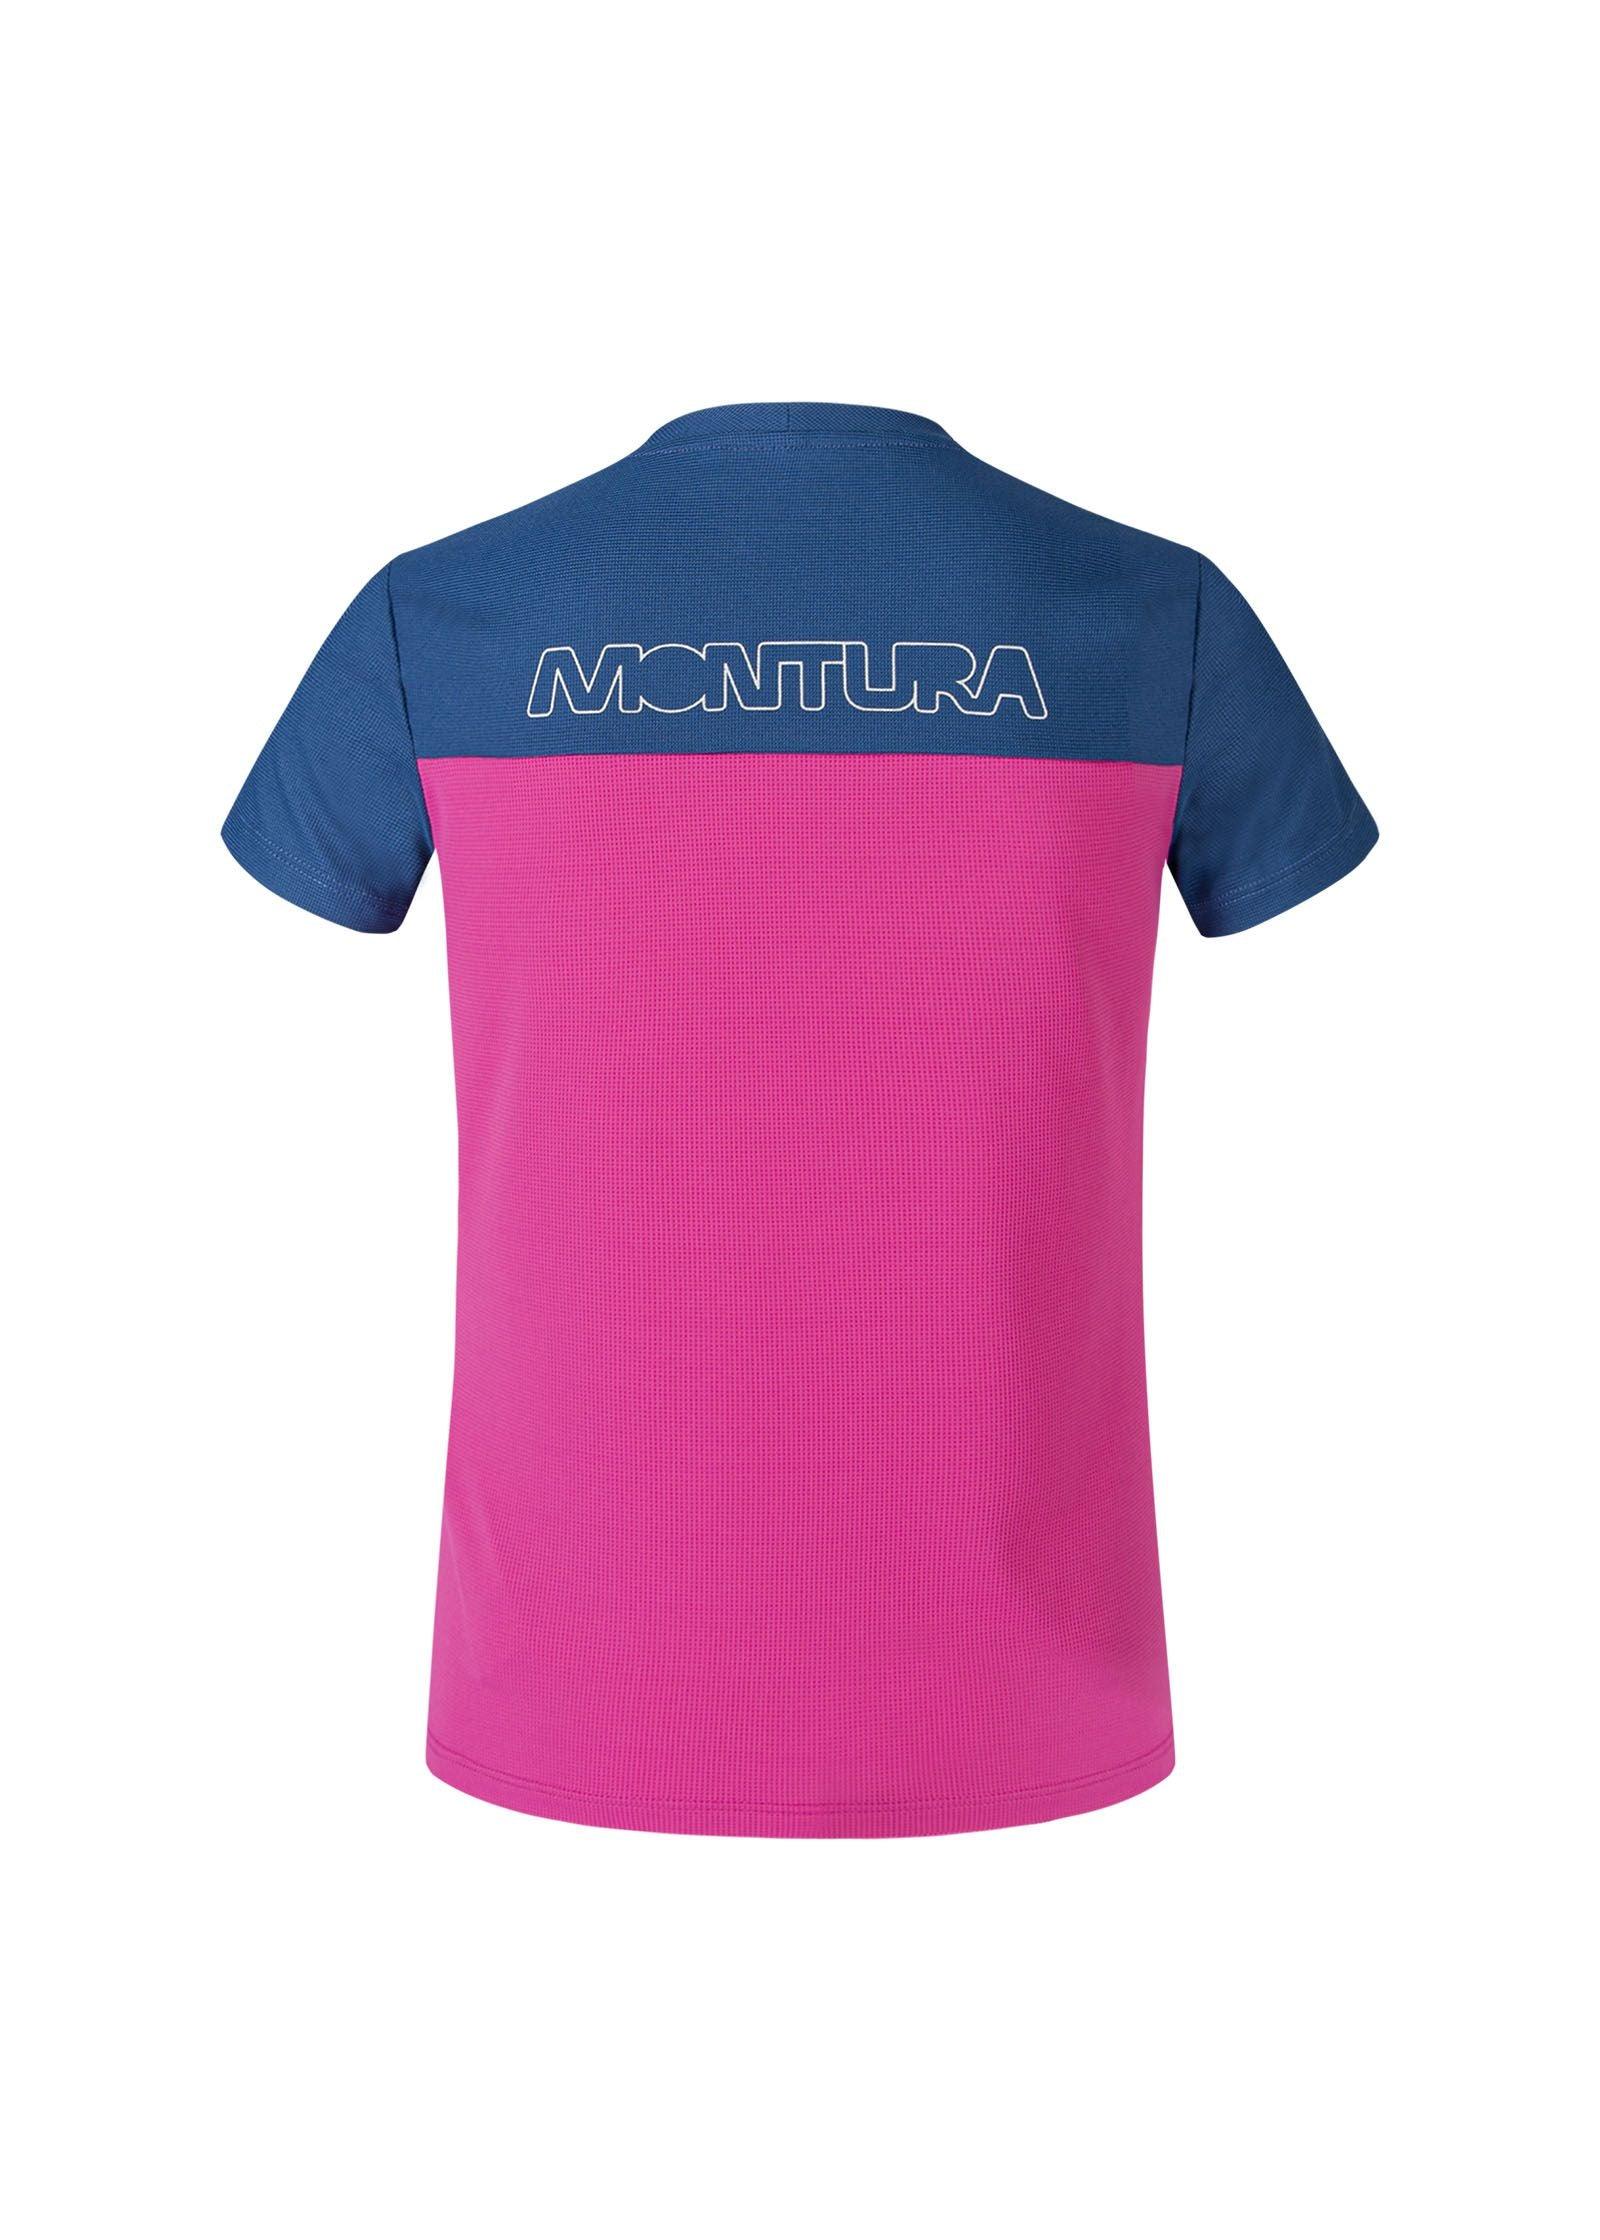 Montura | T-shirt Outdoor 20 Bambina Deep Blue/Intense Violet - Fabbrica Ski Sises